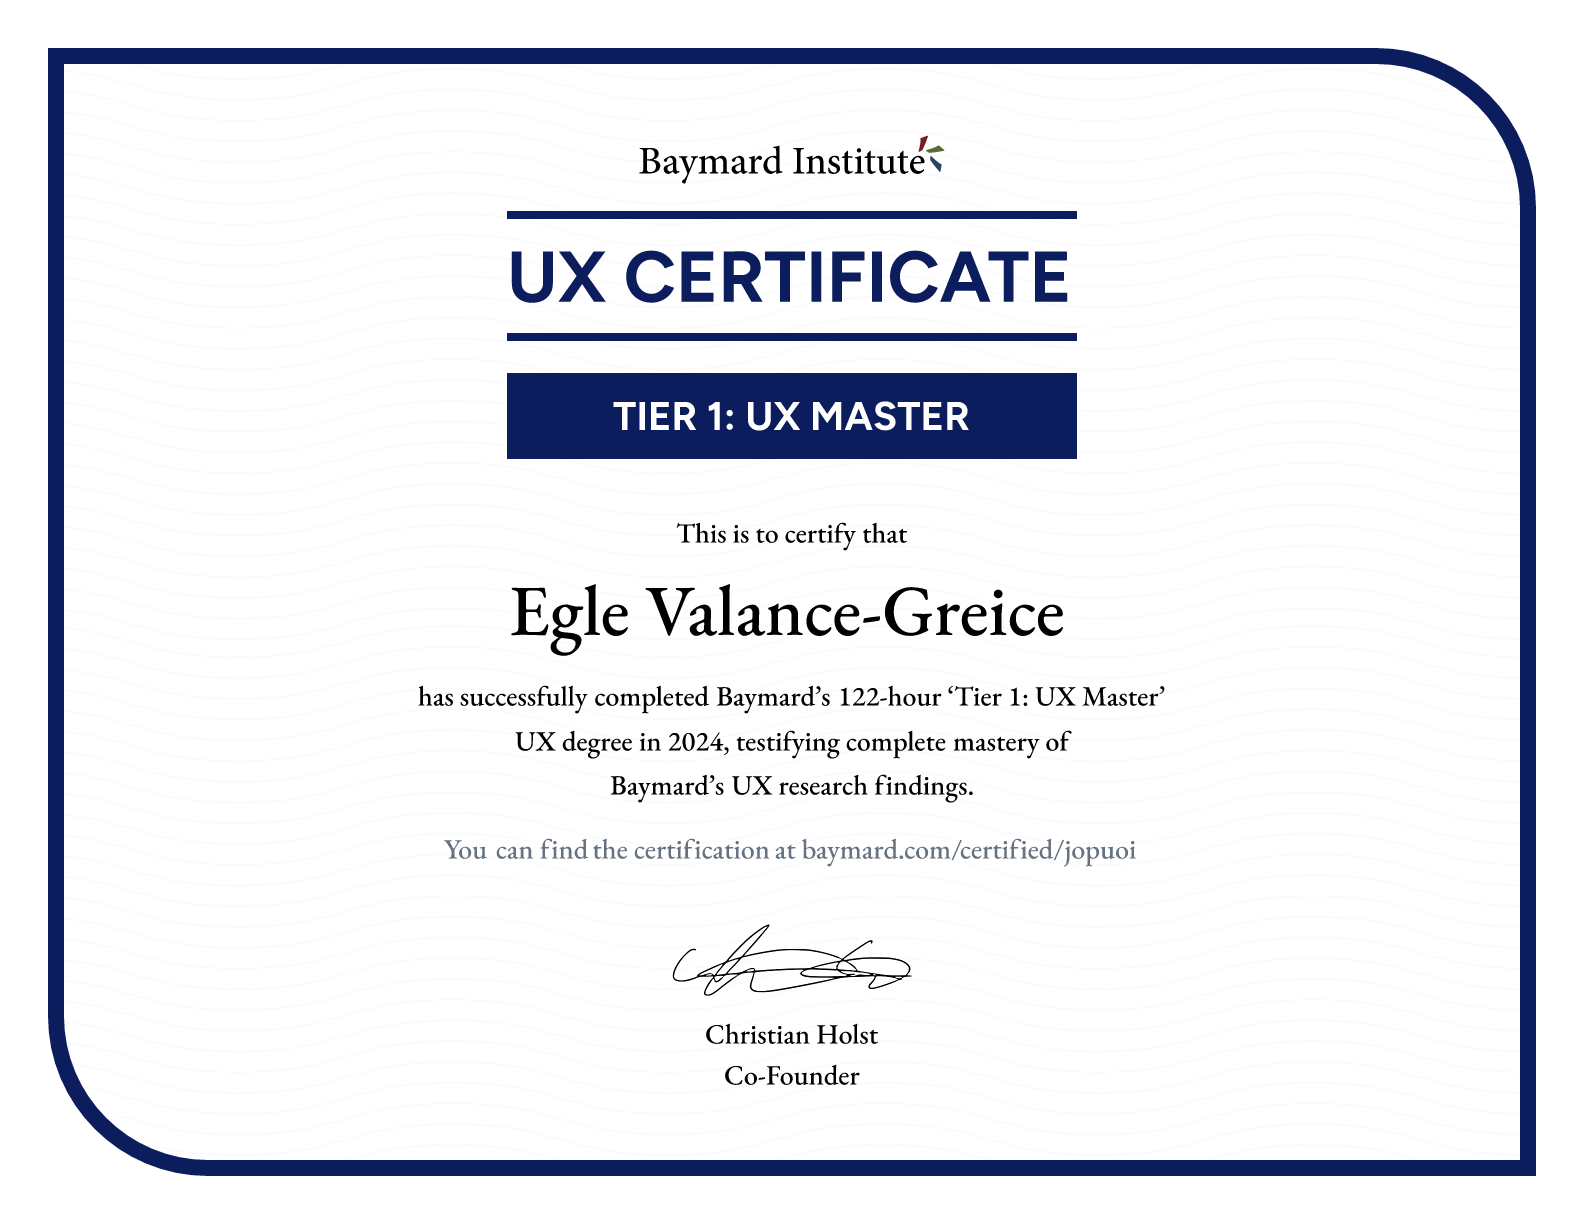 Egle Valance-Greice’s certificate